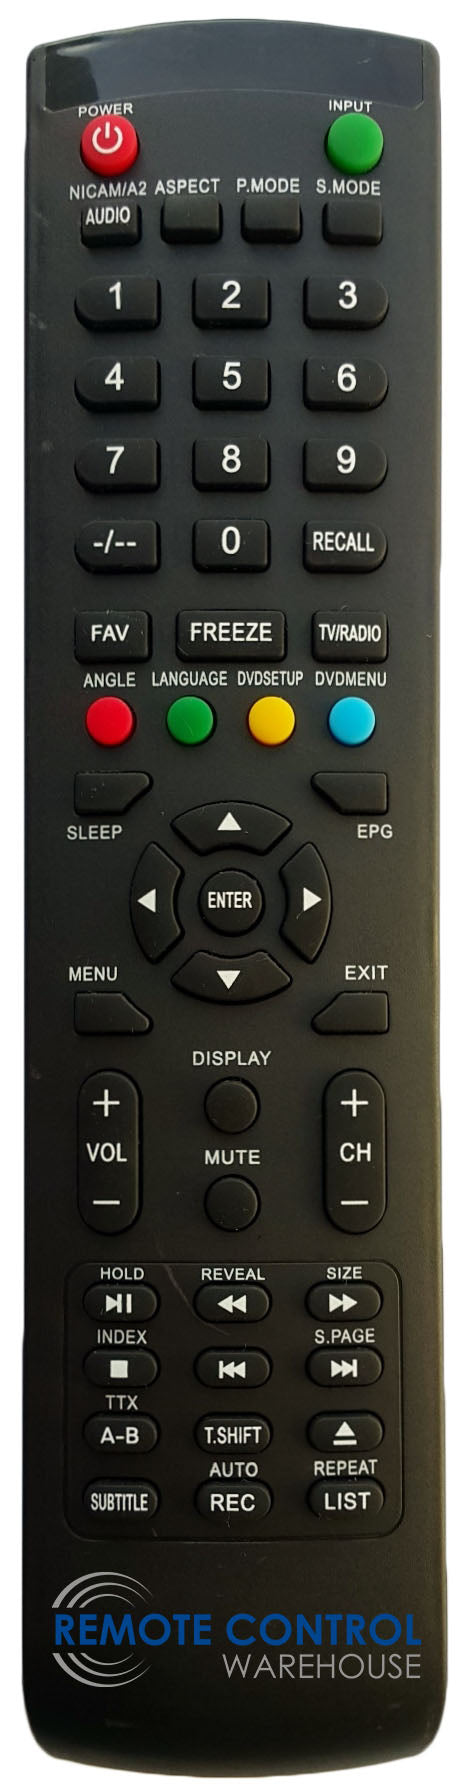 PENDO PNDLHDU185  LCD TV  Replacement Remote Control